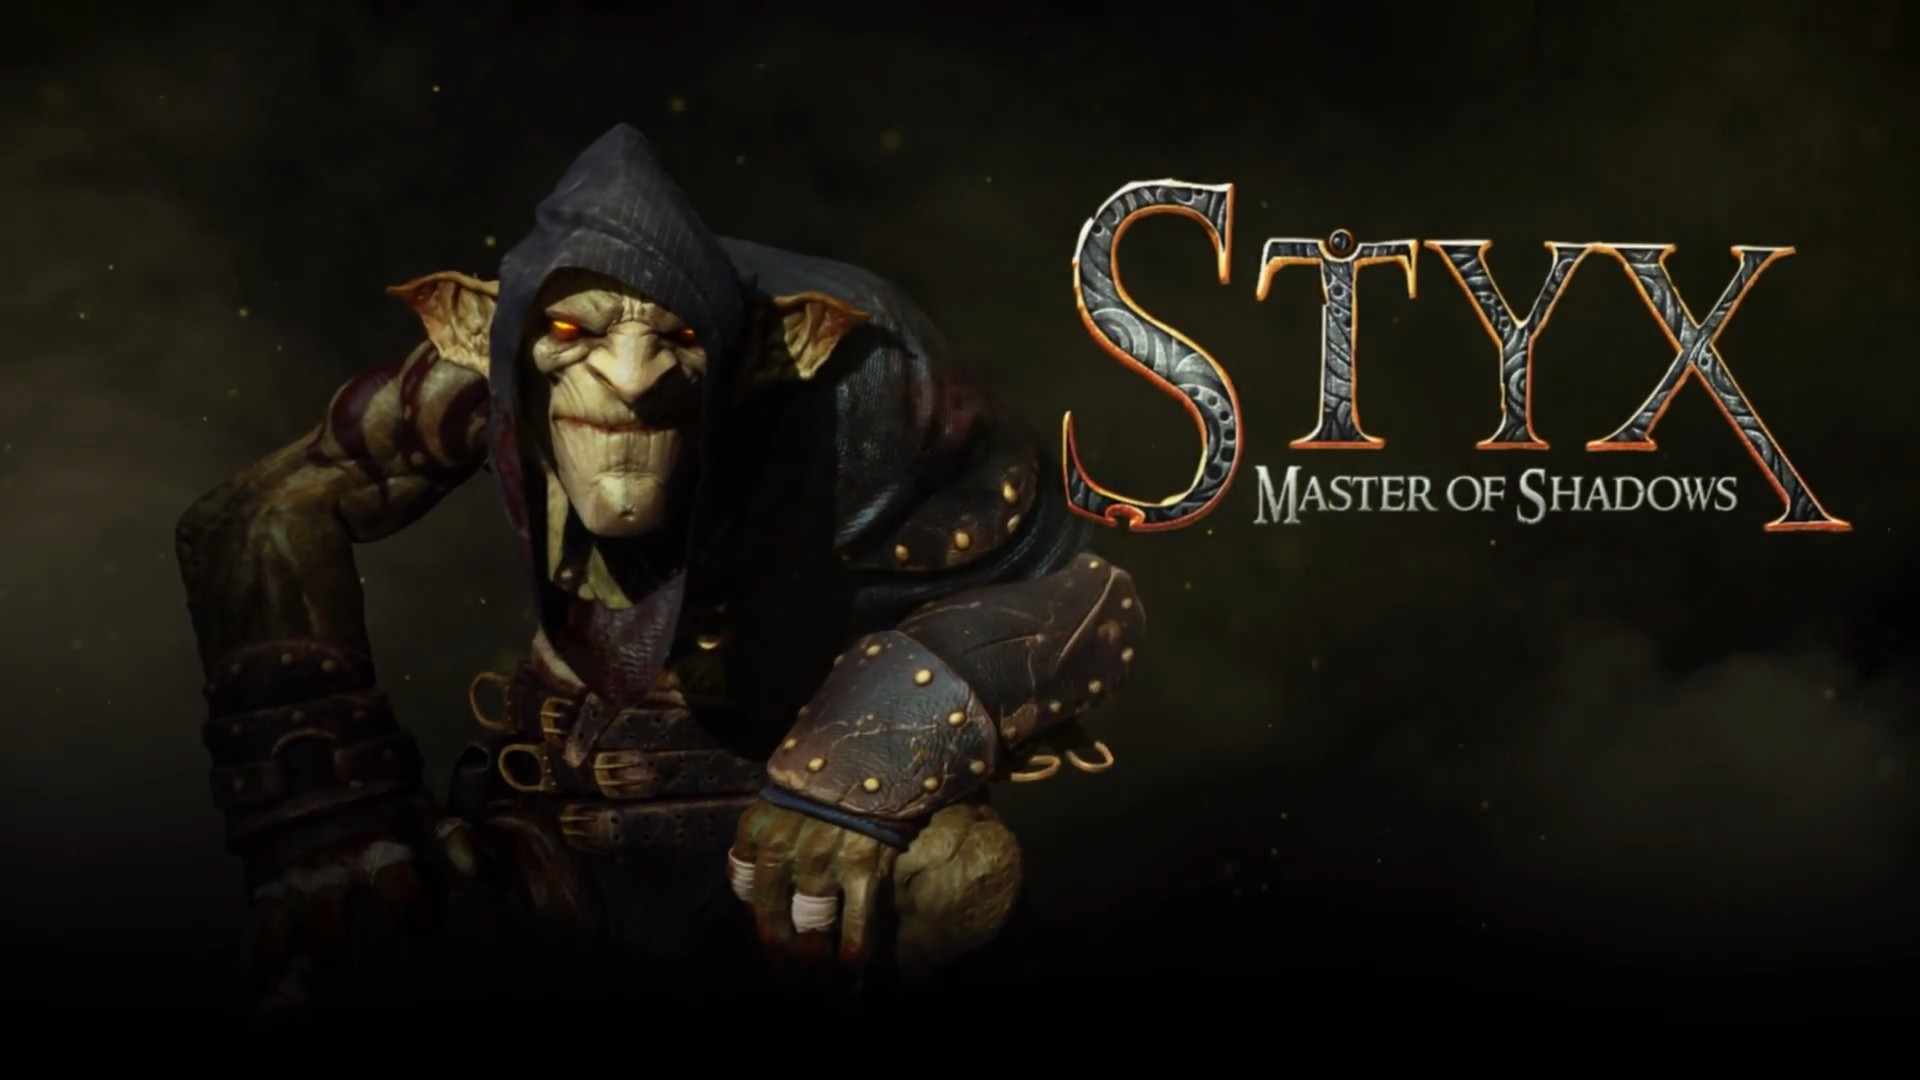 styx-master-of-shadows-teszt/2015/07/12